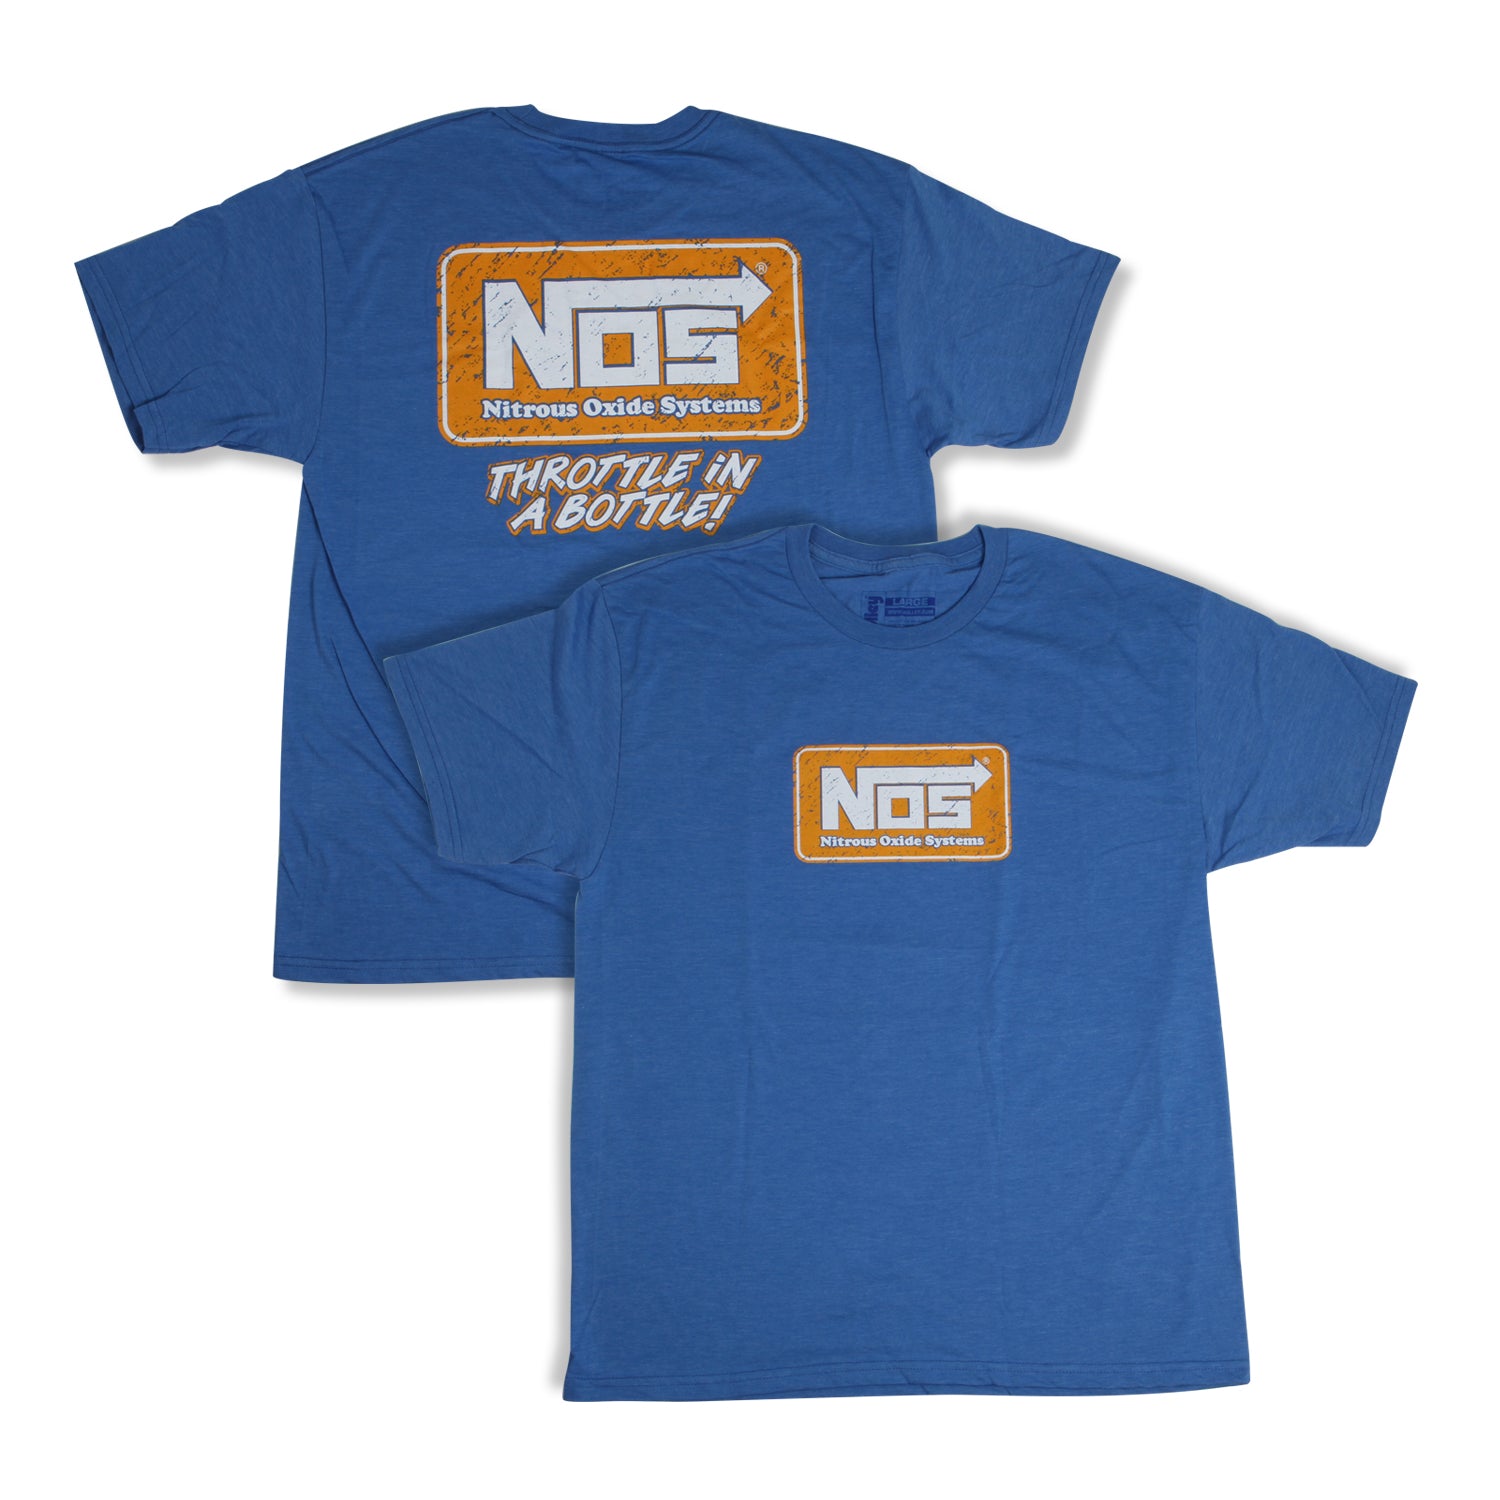 NOS/Nitrous Oxide System T-Shirt 19071-MDNOS